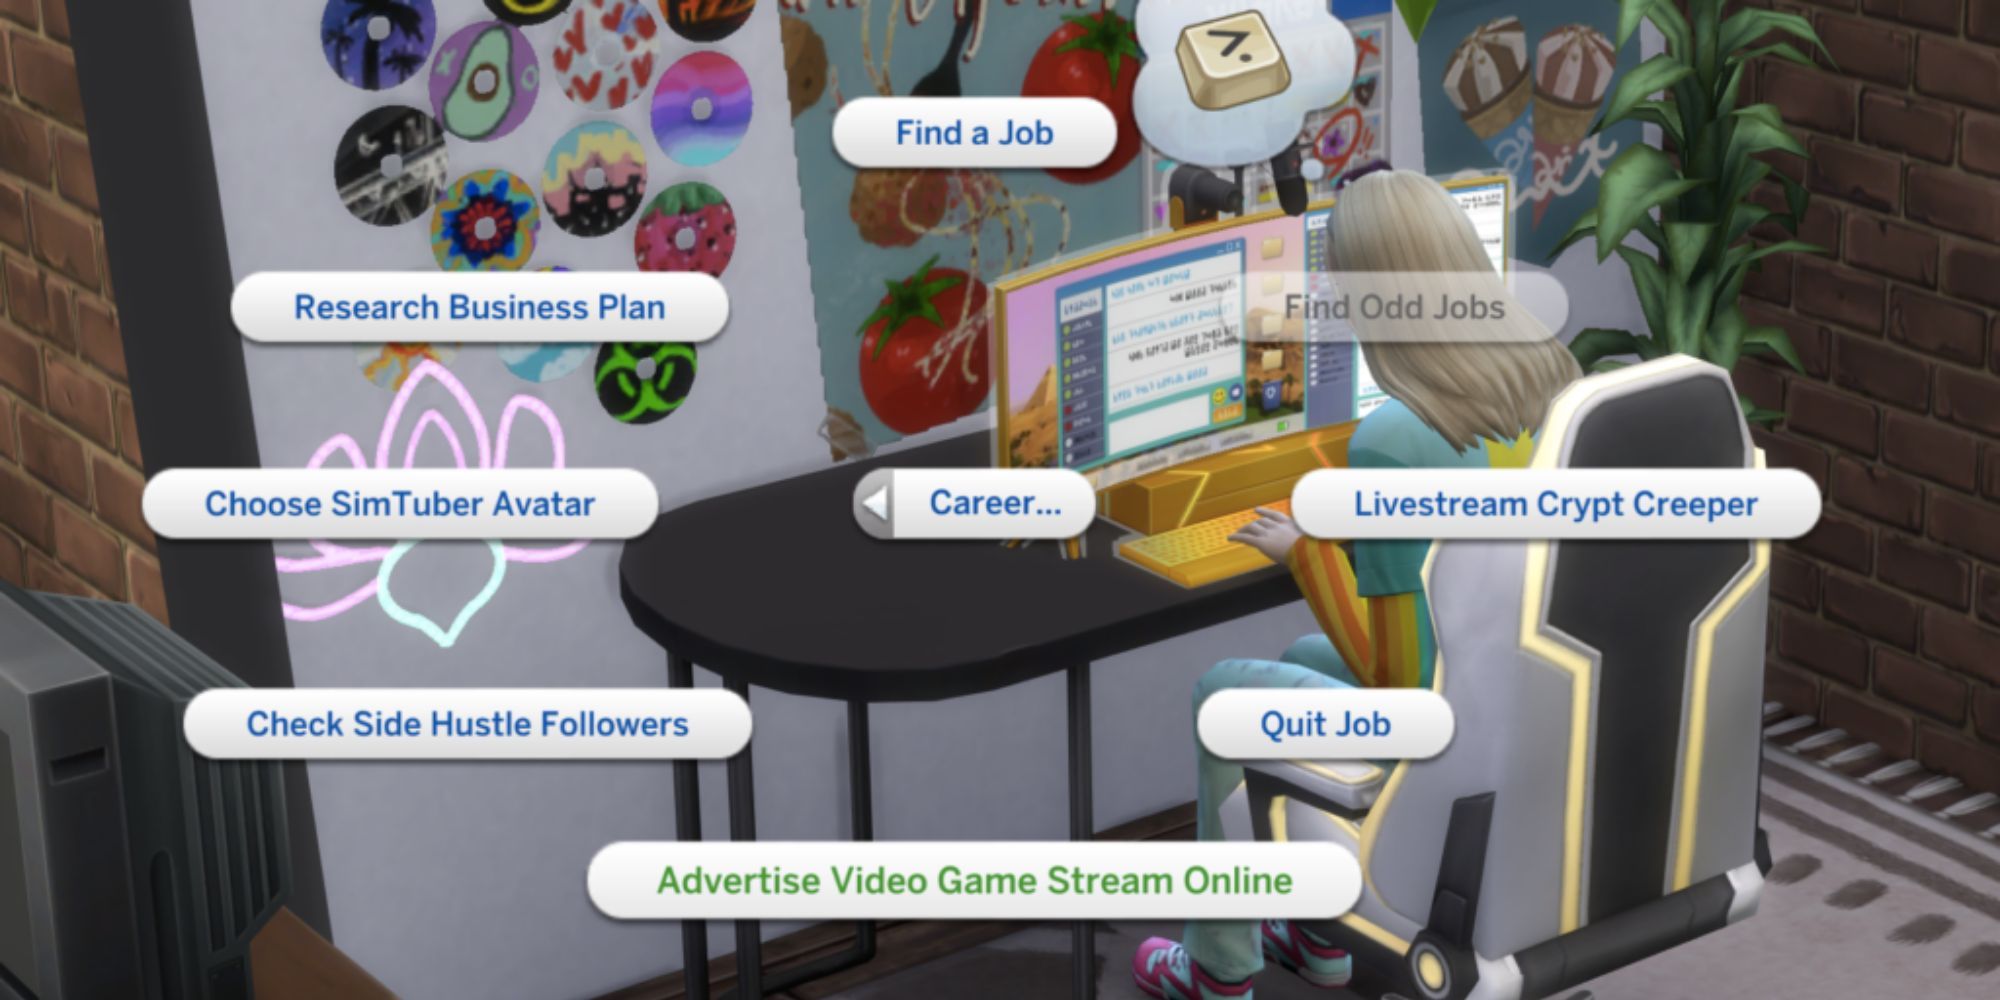 The Sims 4 Entrepreneur Skill